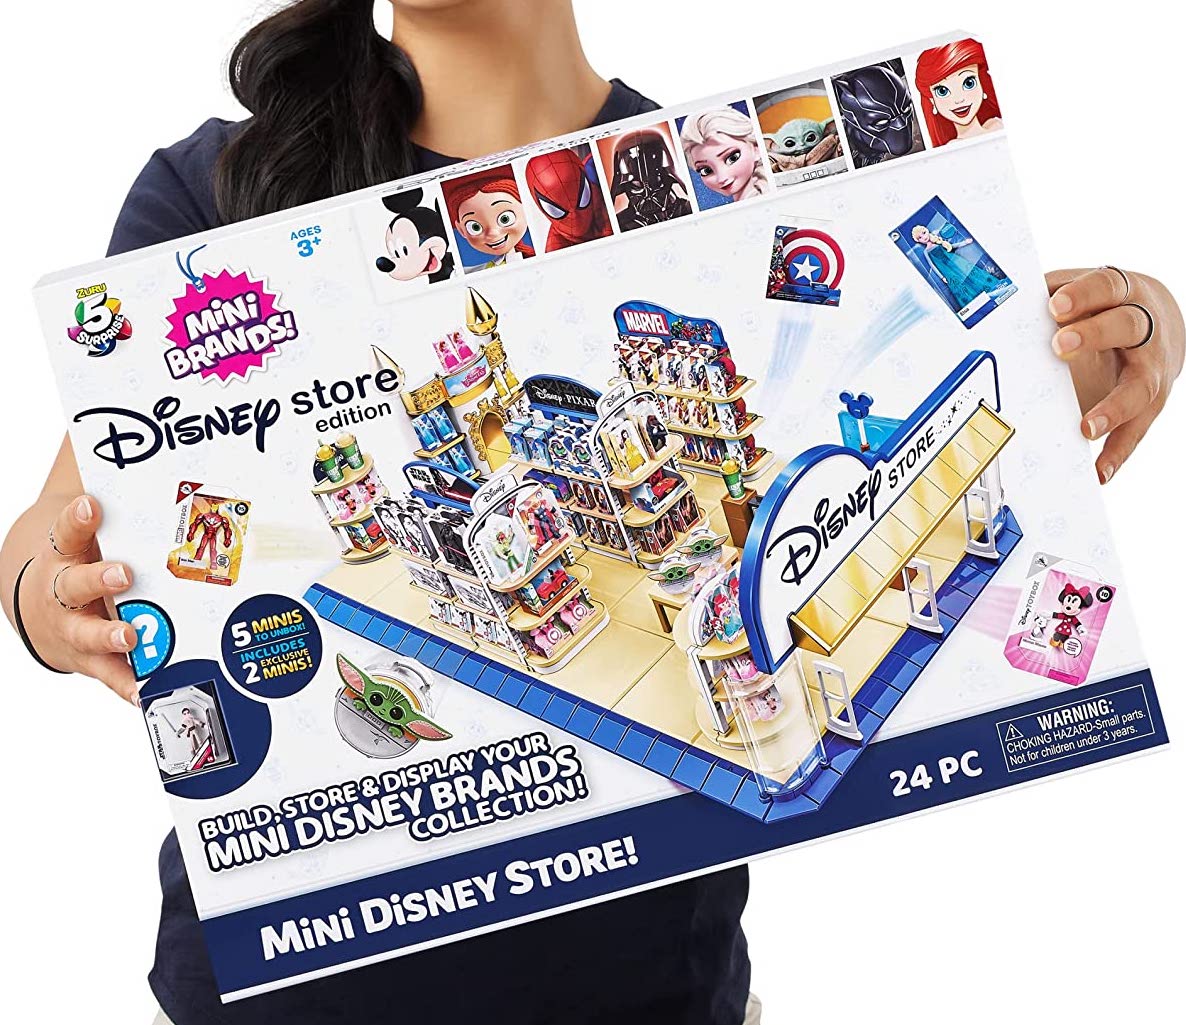 Disney Store Edition